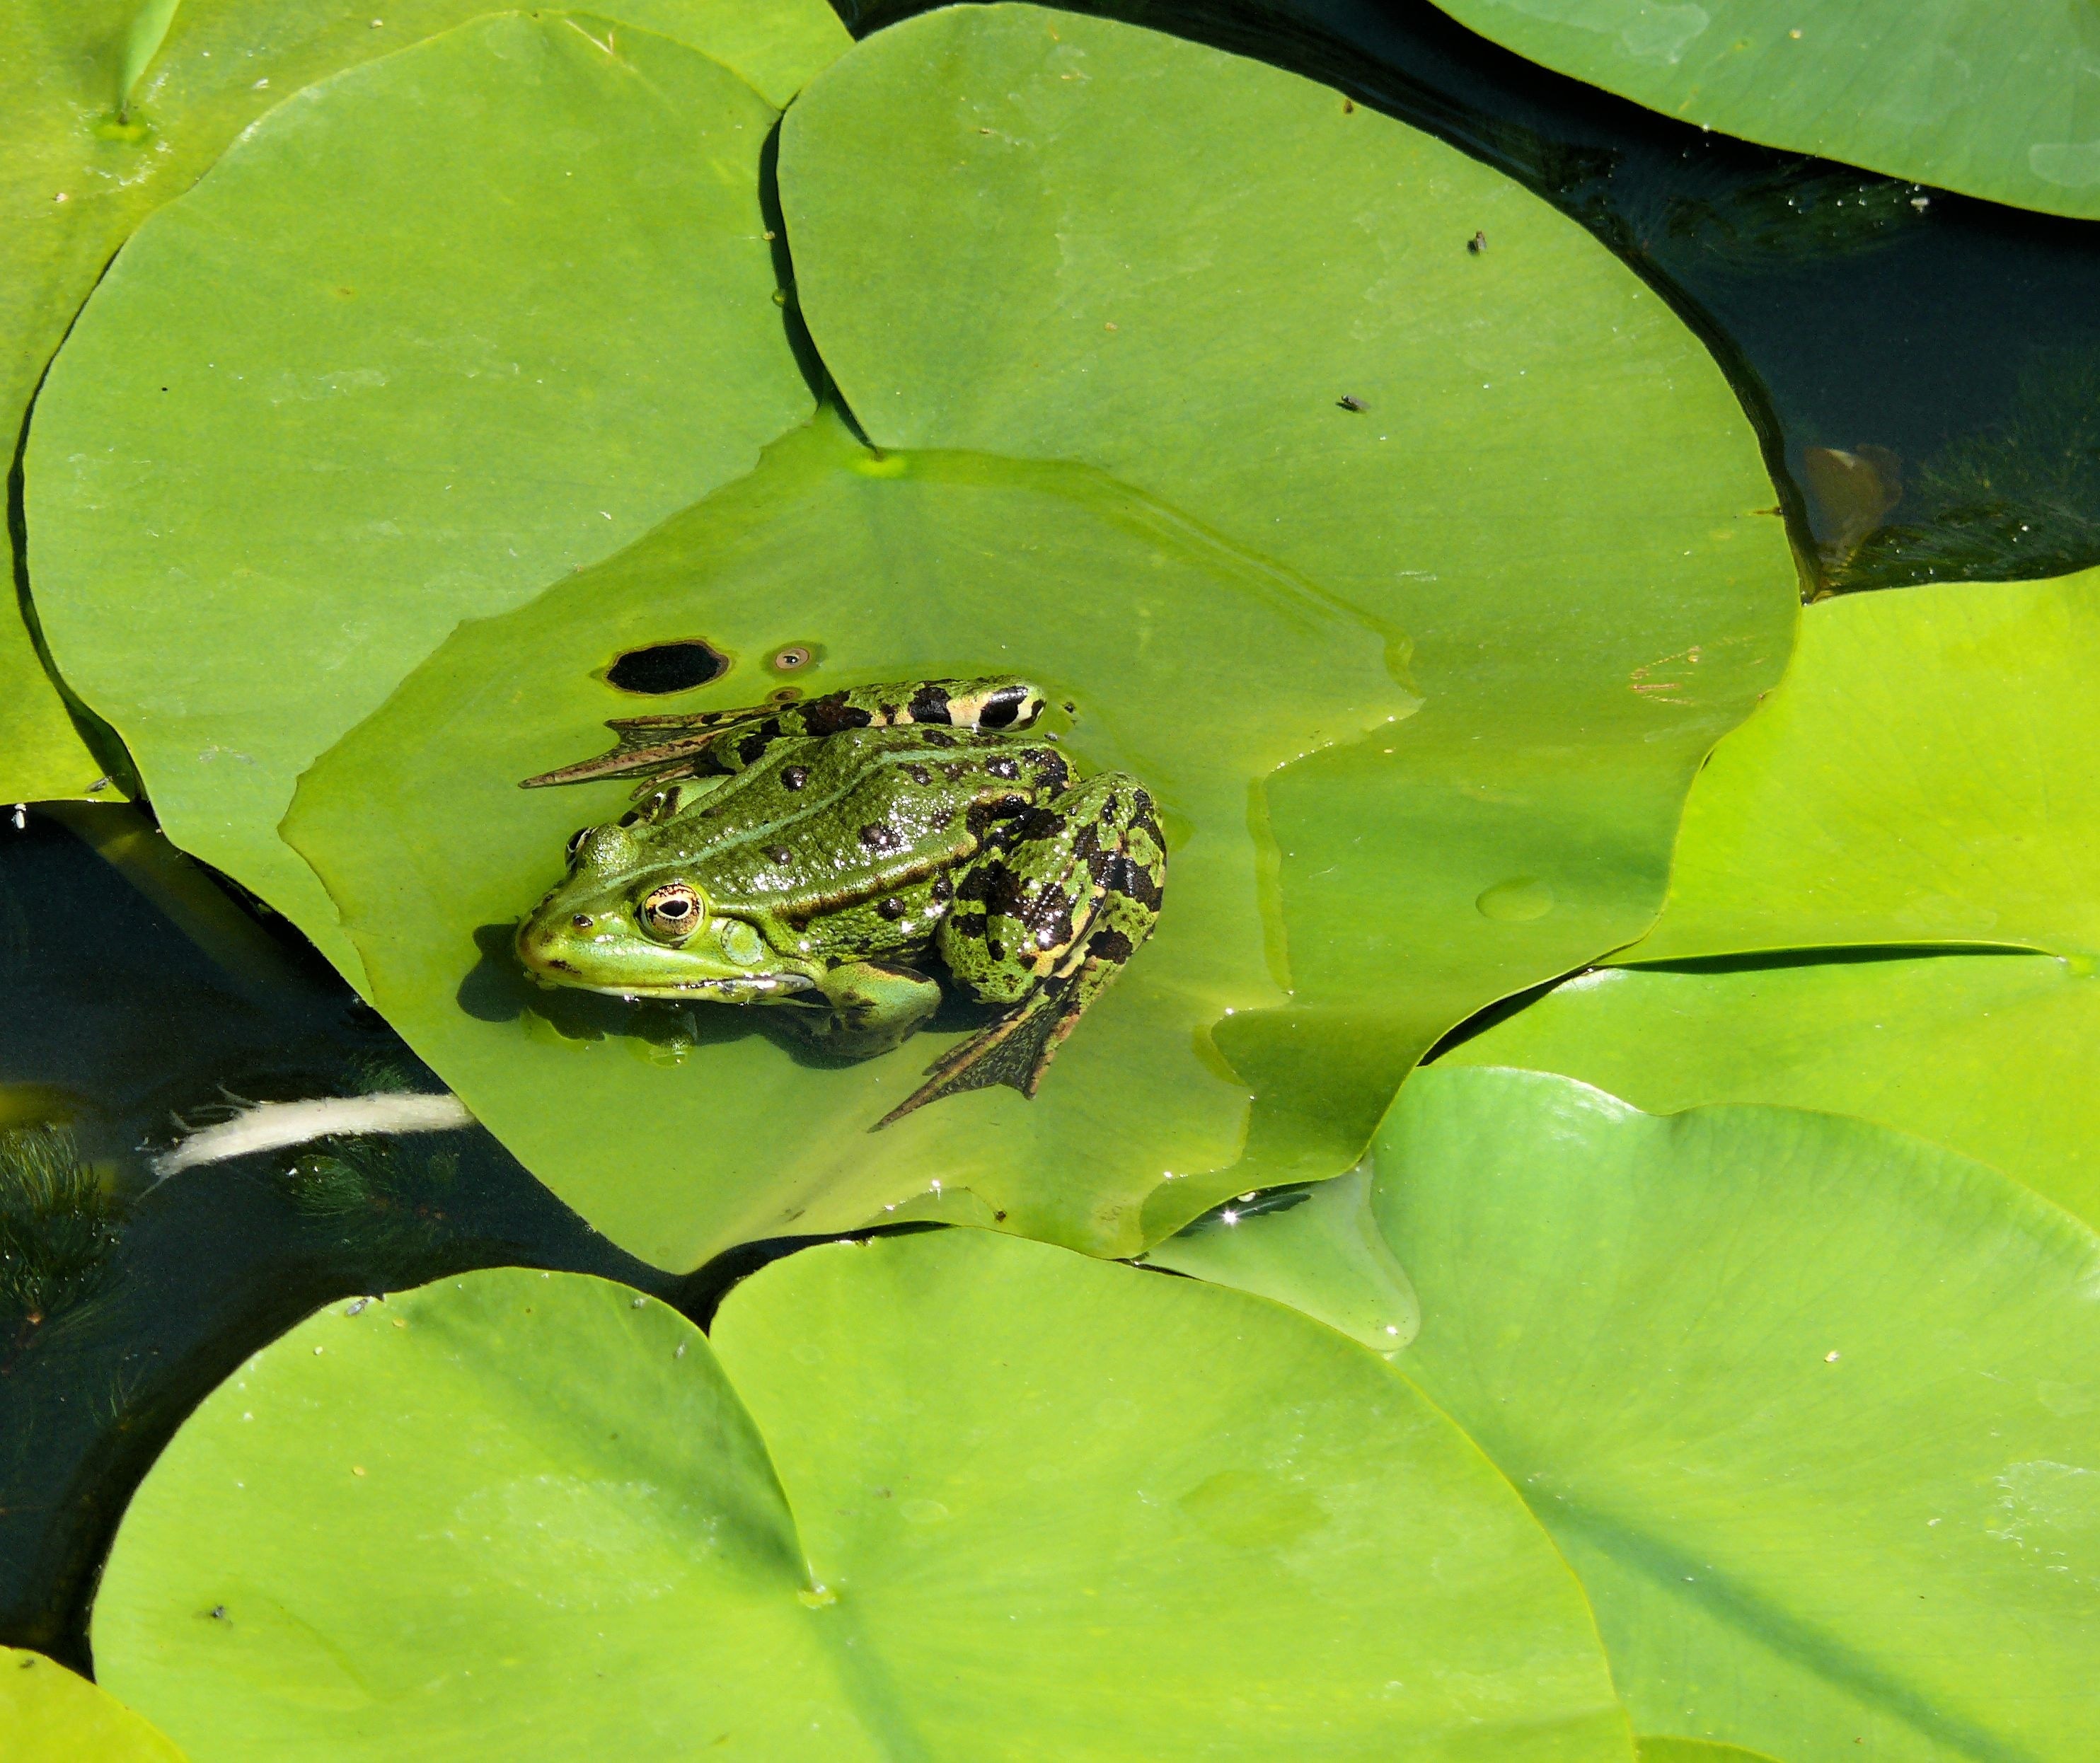 Lily Leaf, Croak, Pond, Green, Frog, one animal, animal themes